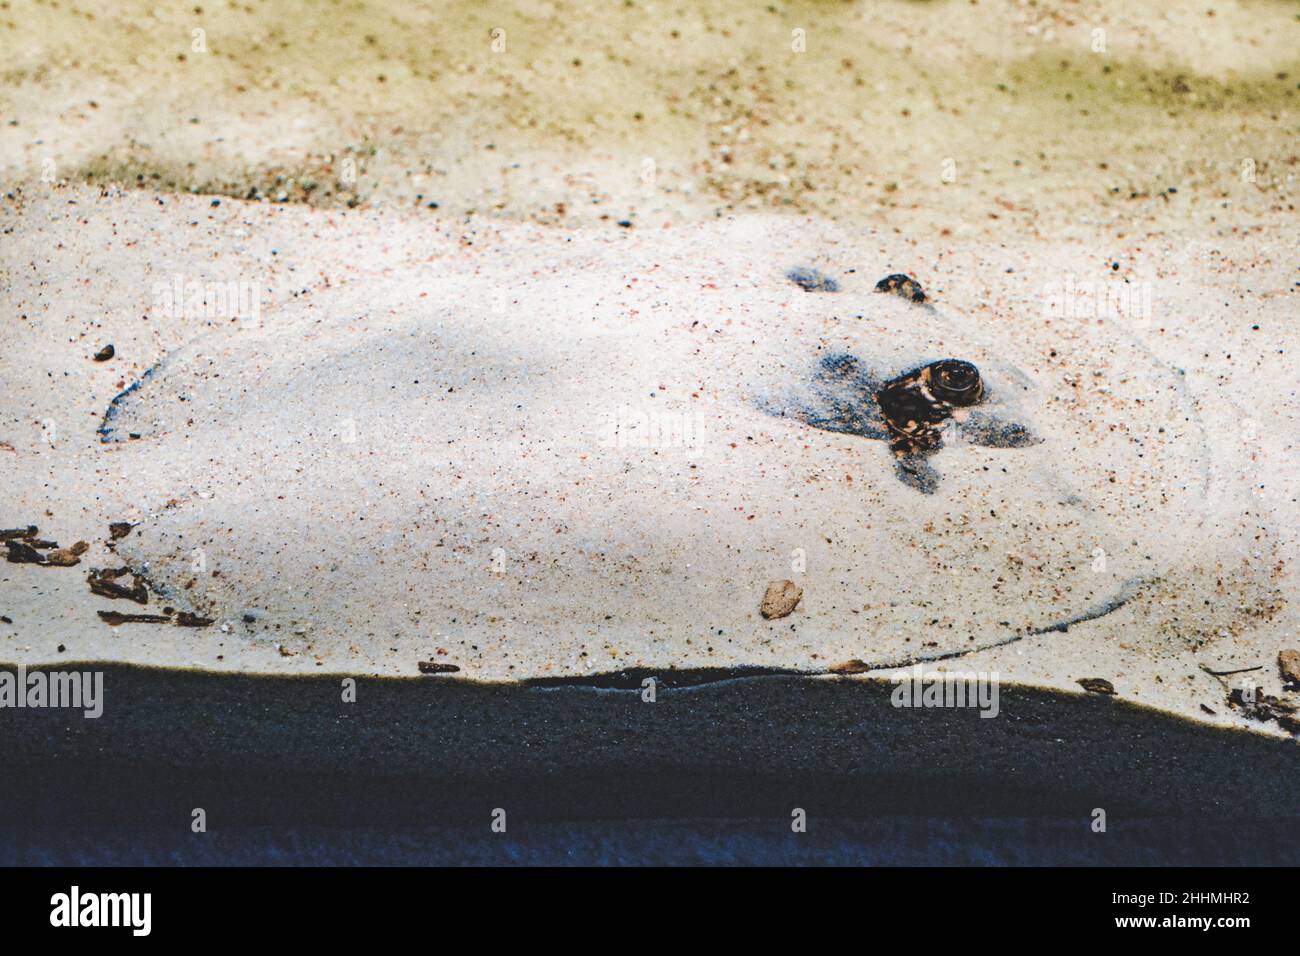 Ocellate river stingray, Potamotrygon motoro fish hidden under sand Stock Photo